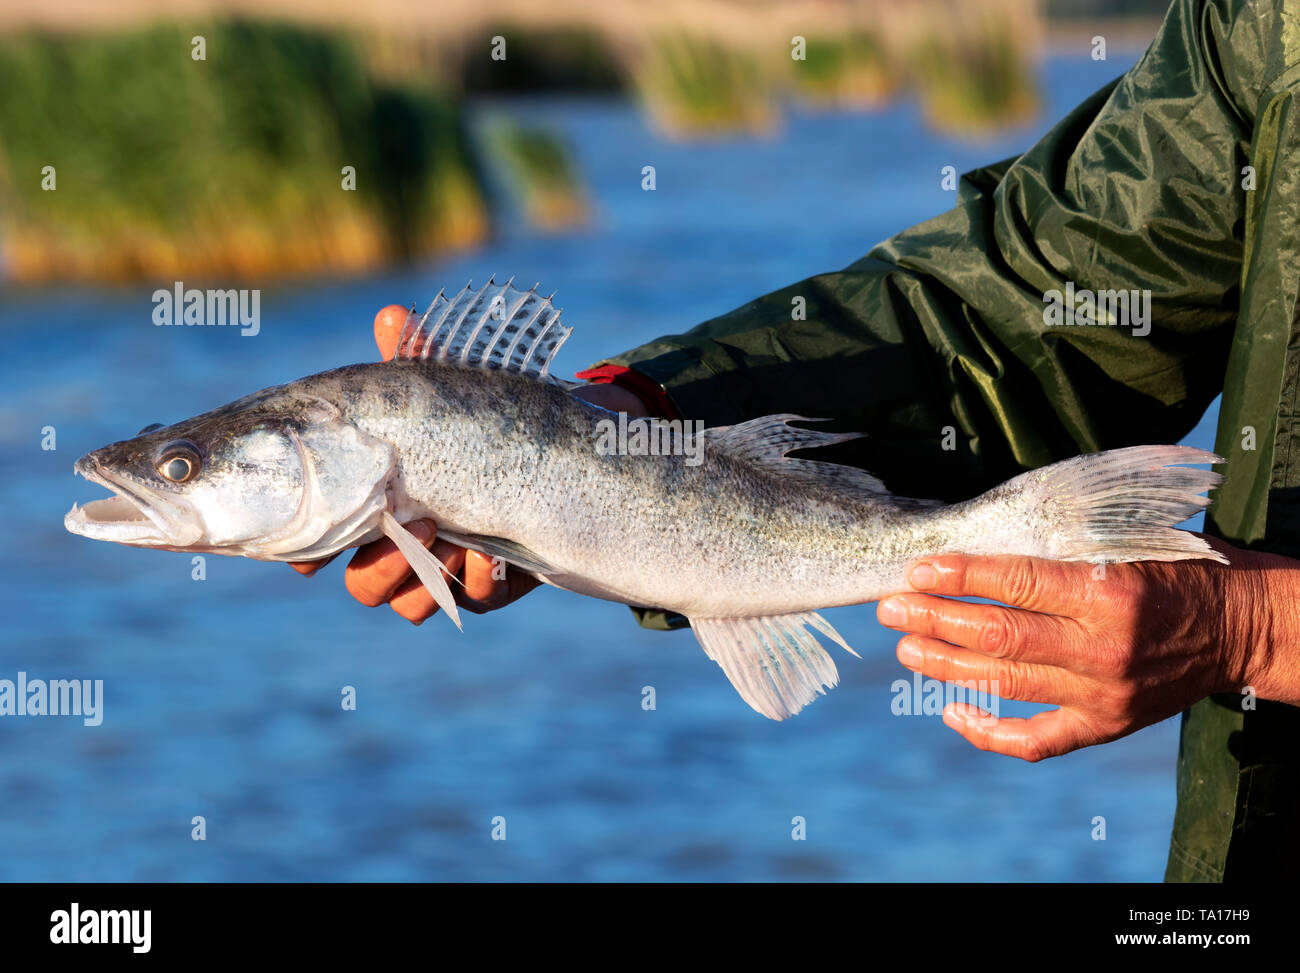 Zander (Sander lucioperca) from Lake Balaton, Hungary Stock Photo - Alamy